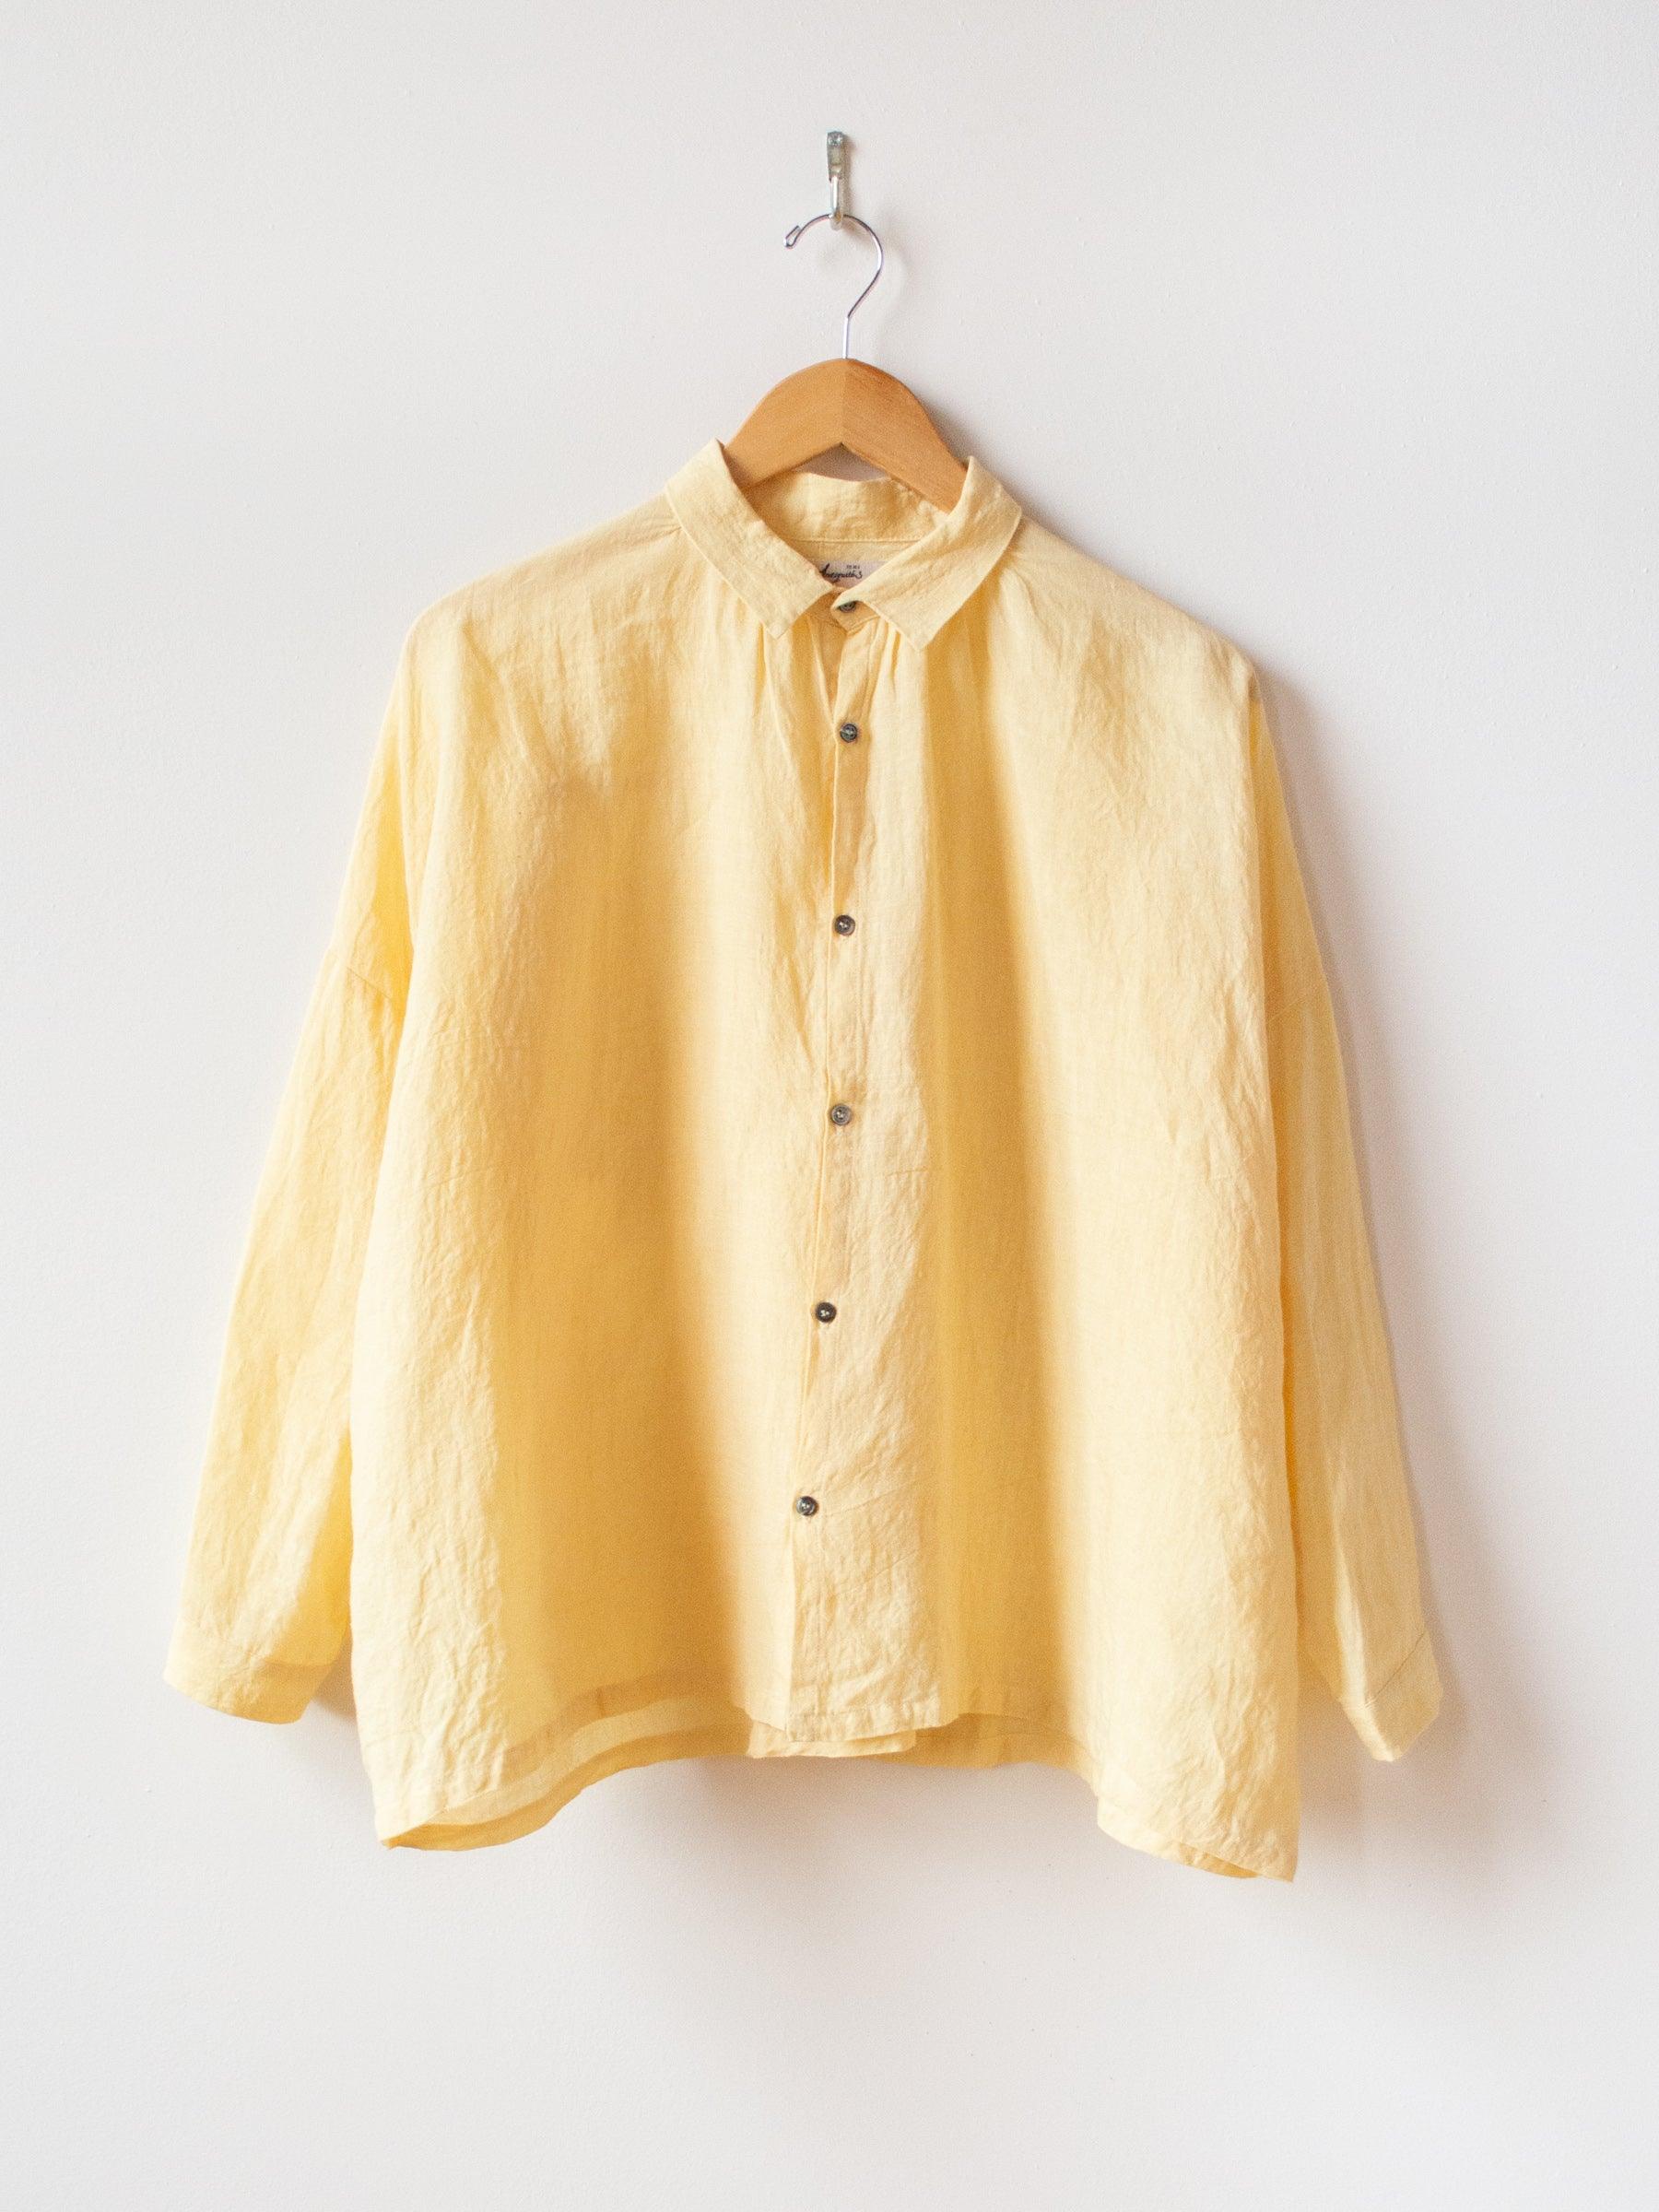 Namu Shop - Ichi Antiquites Linen Gather Shirt - Yellow